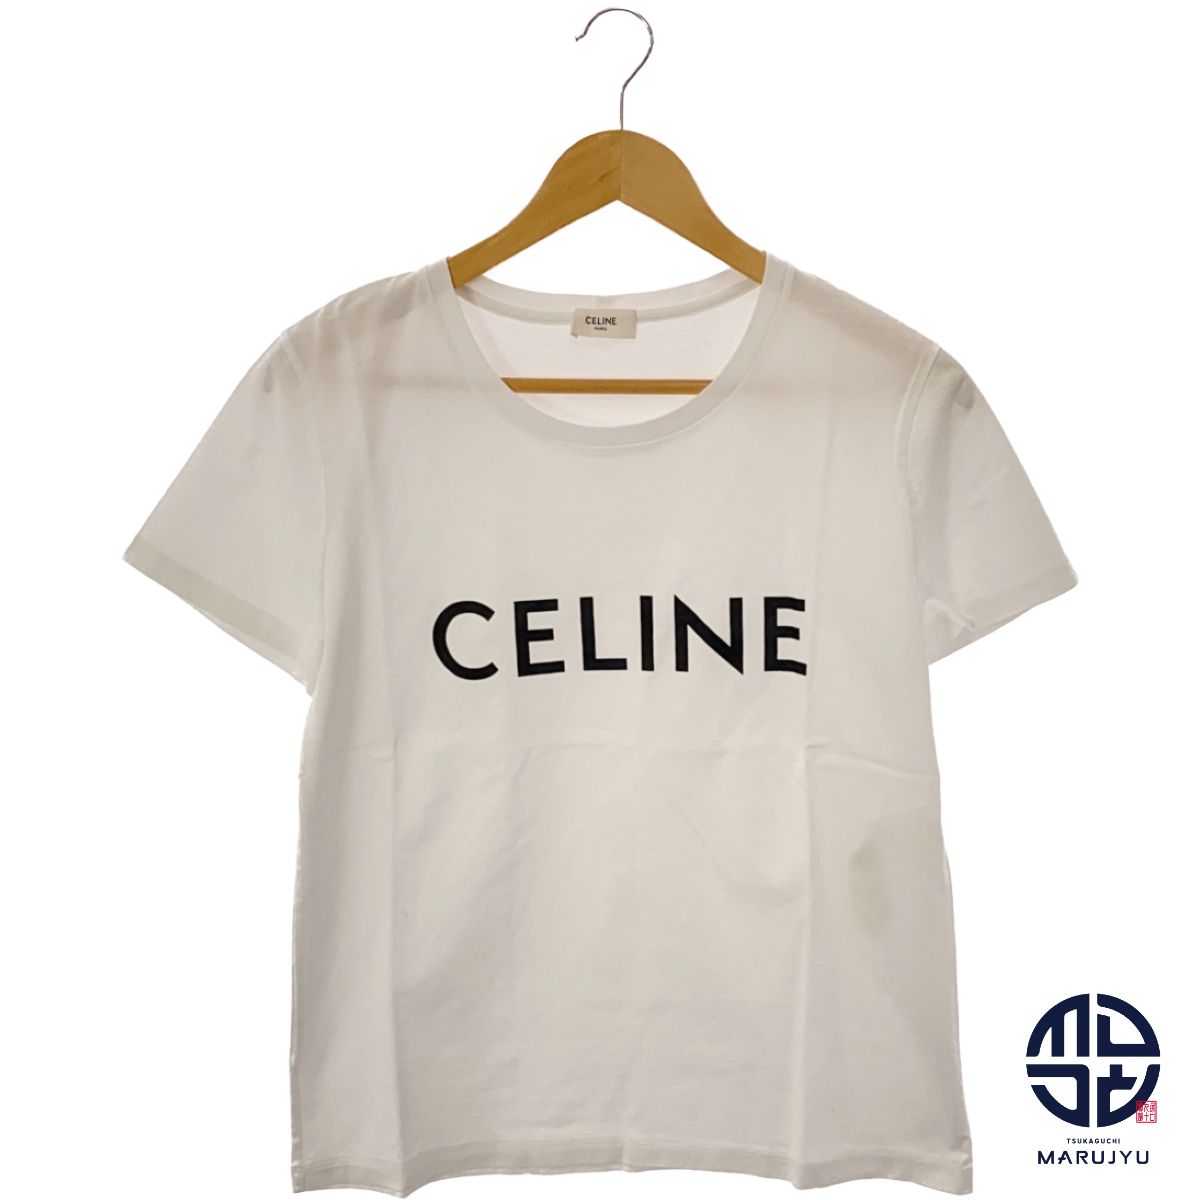 CELINE セリーヌ ロゴ Tシャツ 白 ホワイト 2X314916G ブランド